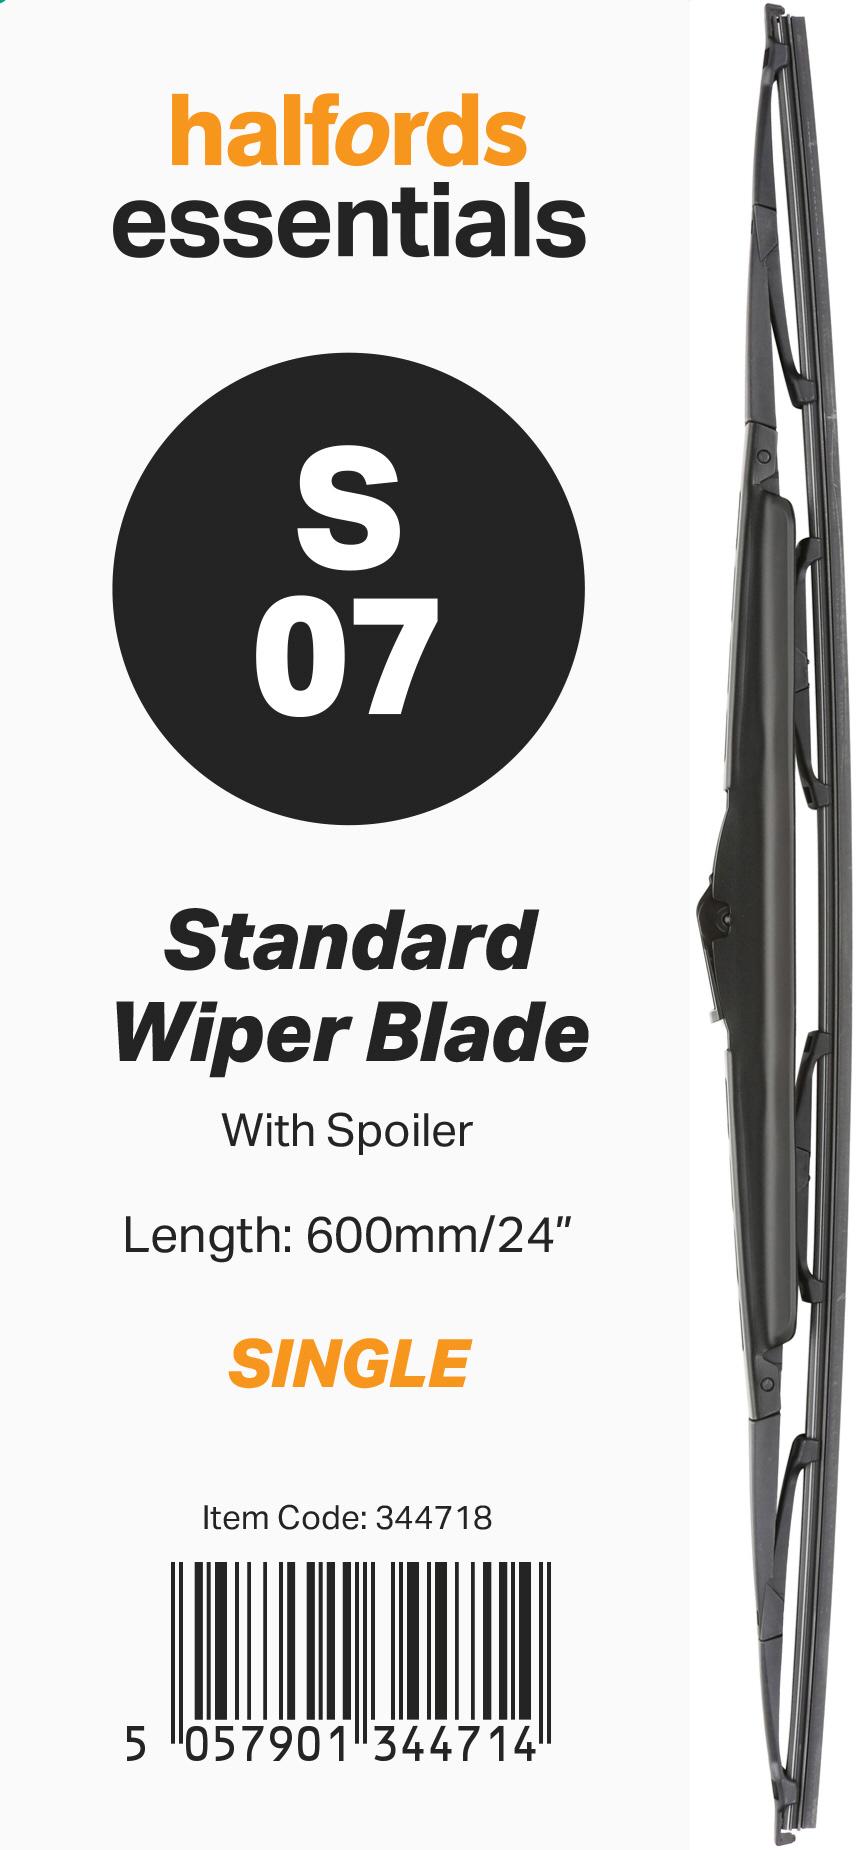 Halfords Essentials Spoiler Wiper Blade S07 - 24 Inch